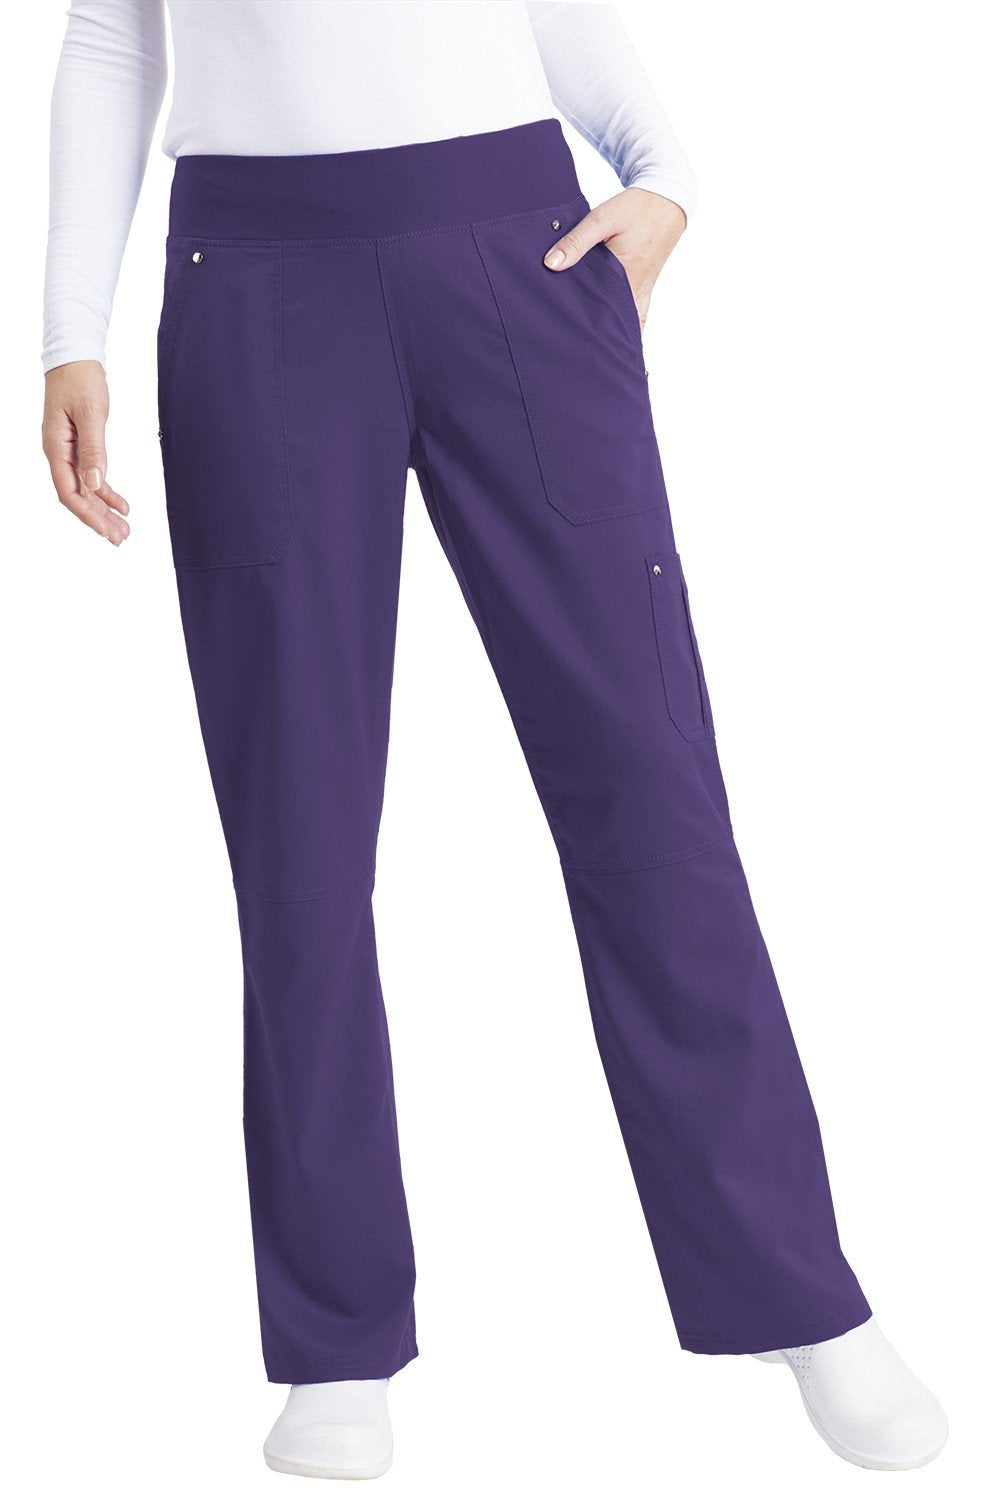  healing hands 6 Pocket Scrubs Pants for Women Purple